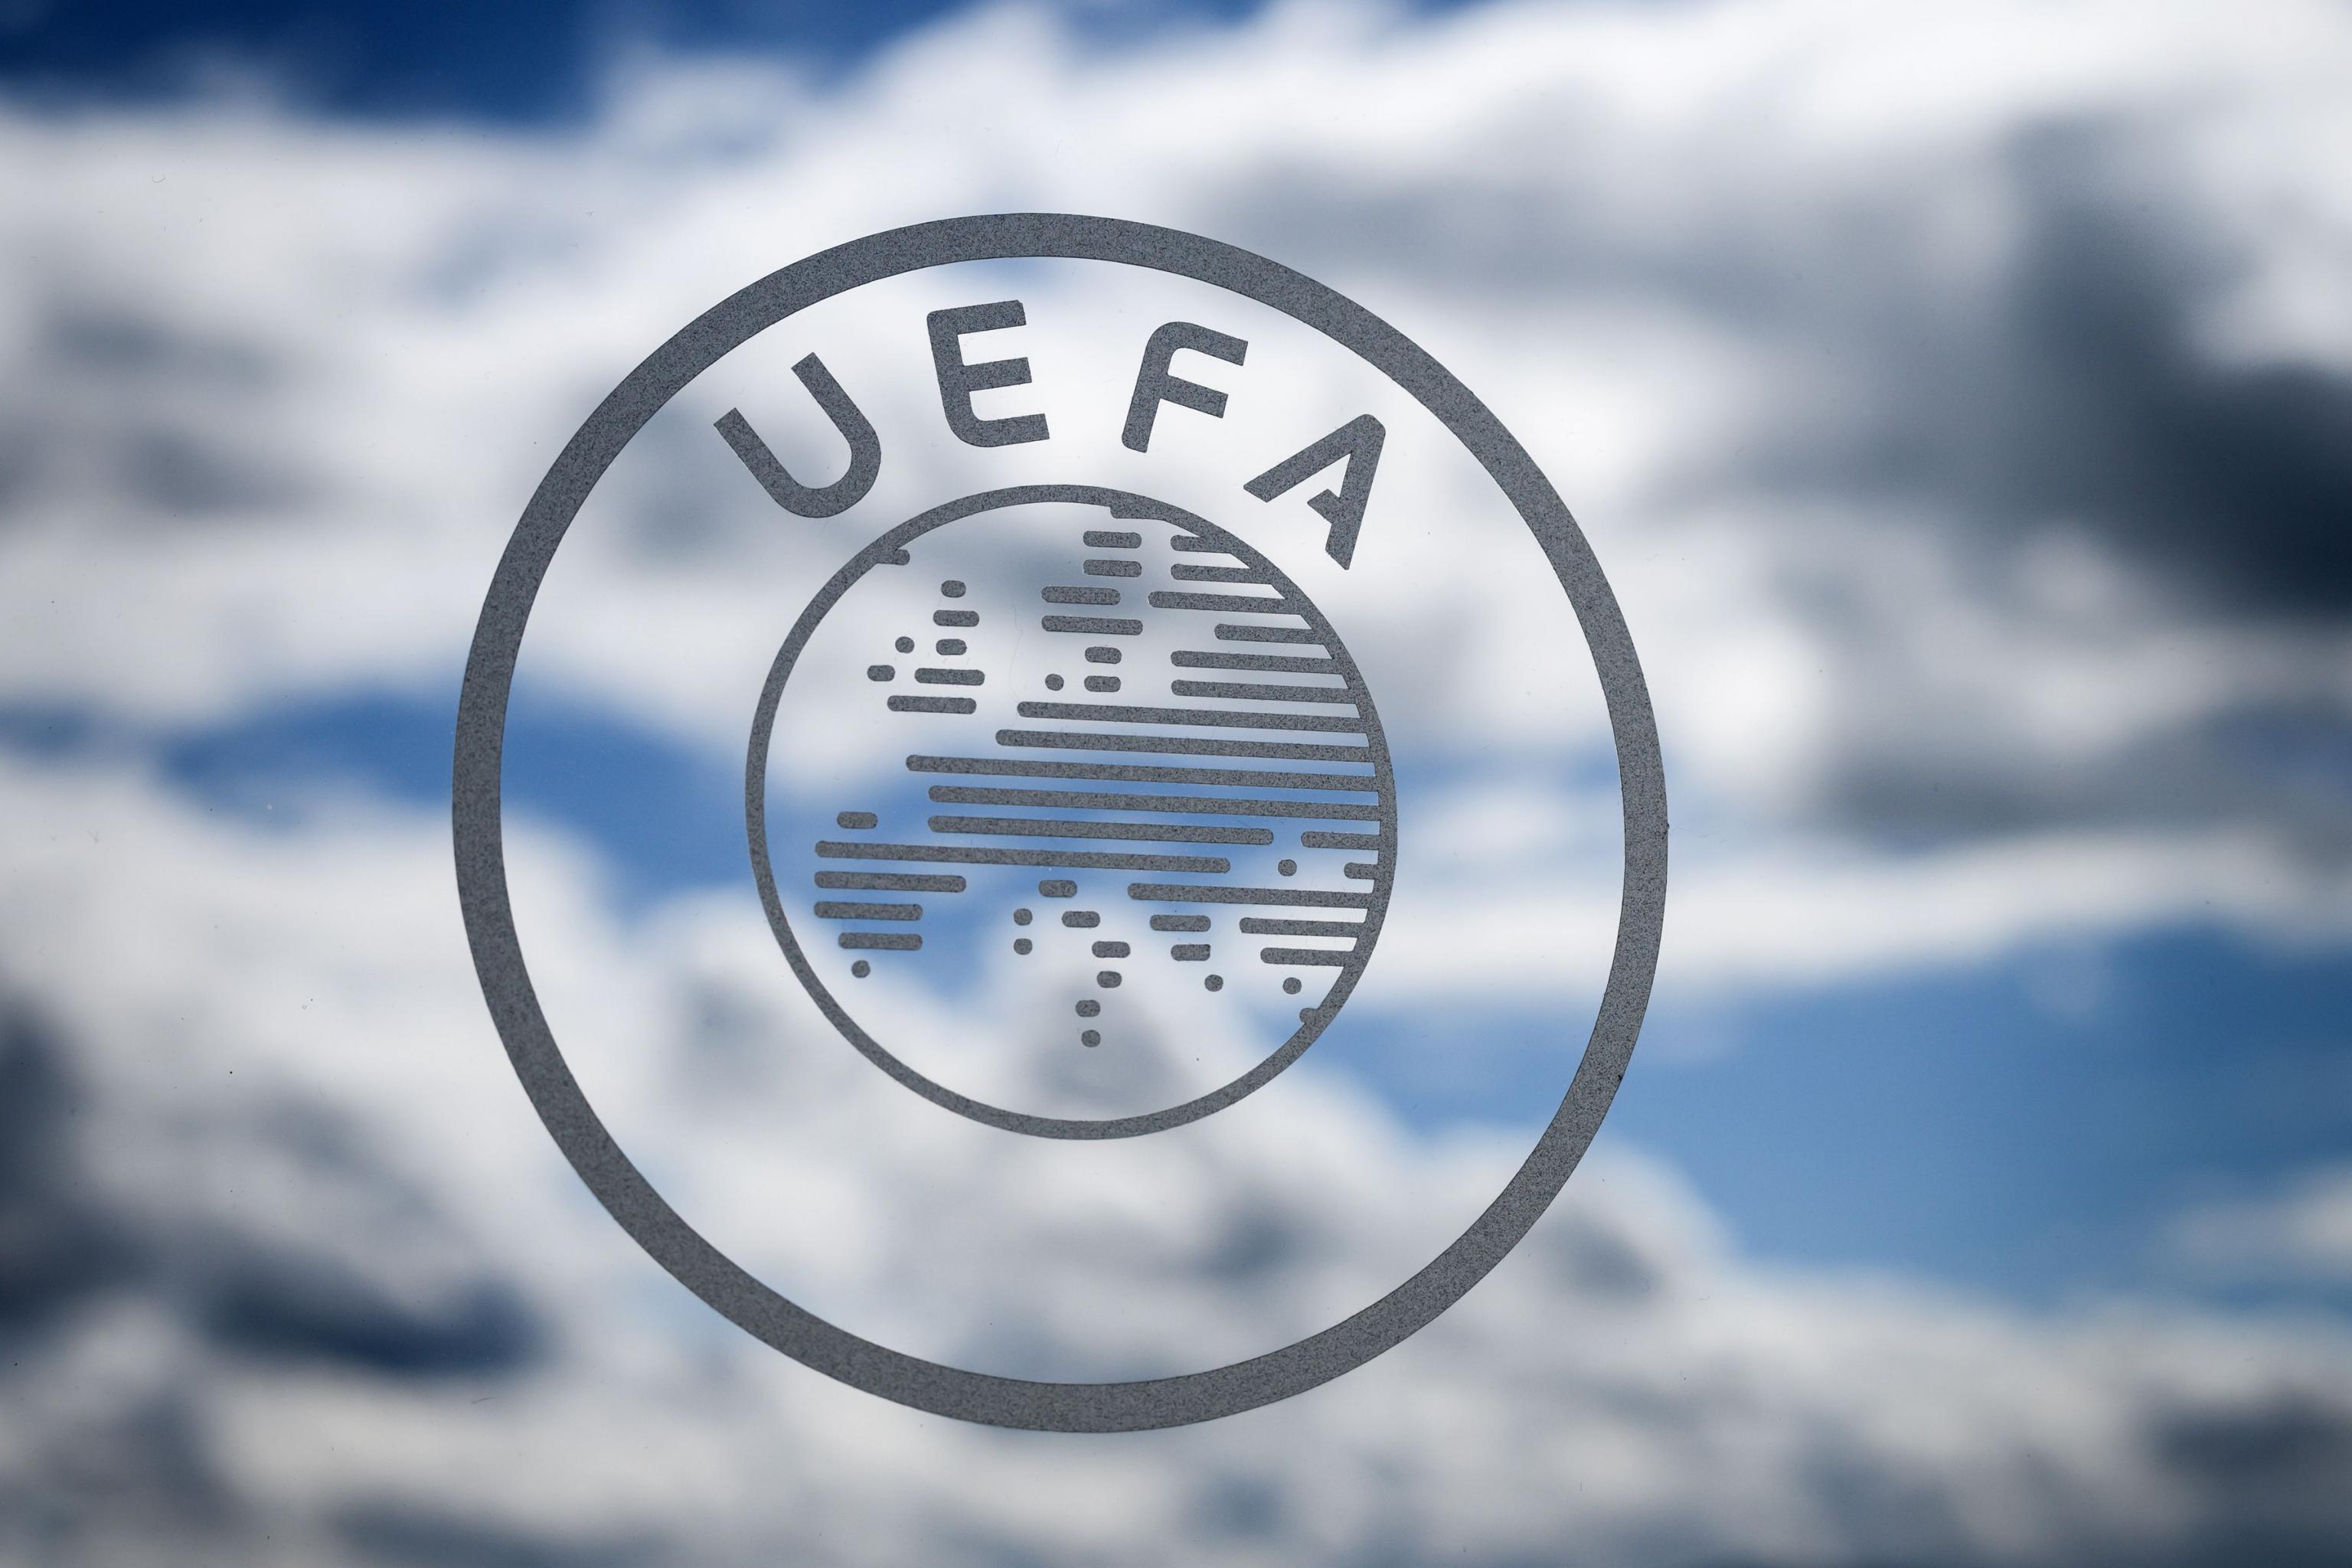 2018/19 UEFA Women's Champions League qualifying round fixtures